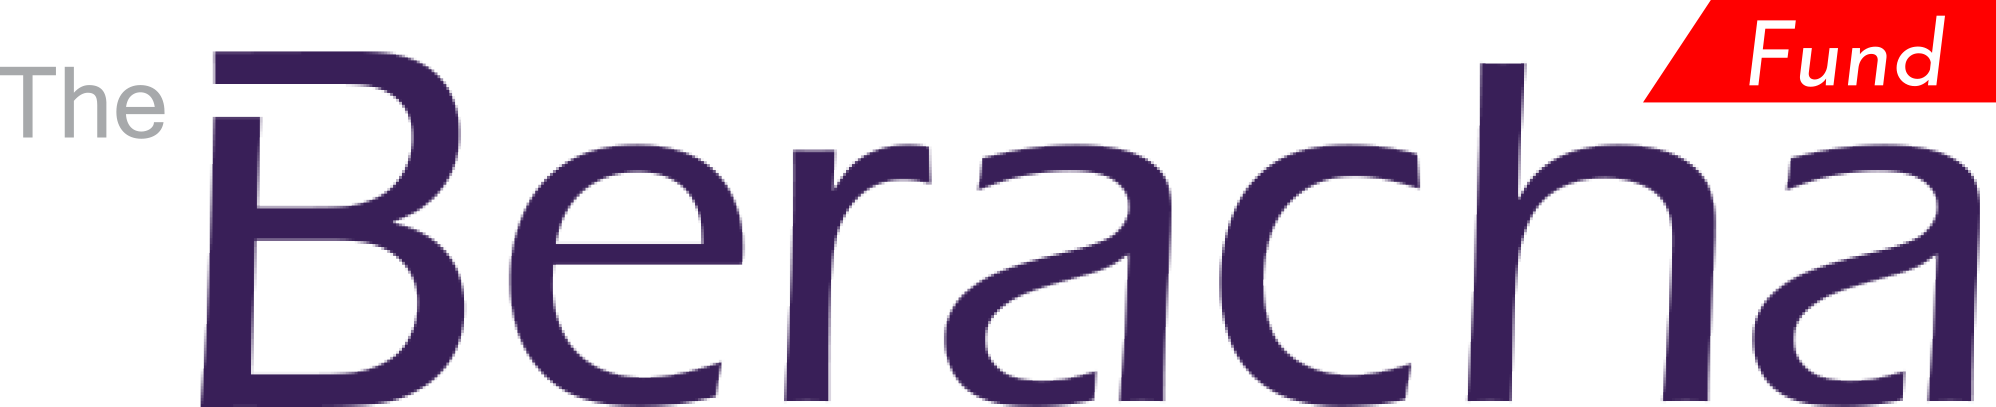 The Beracha Fund logo